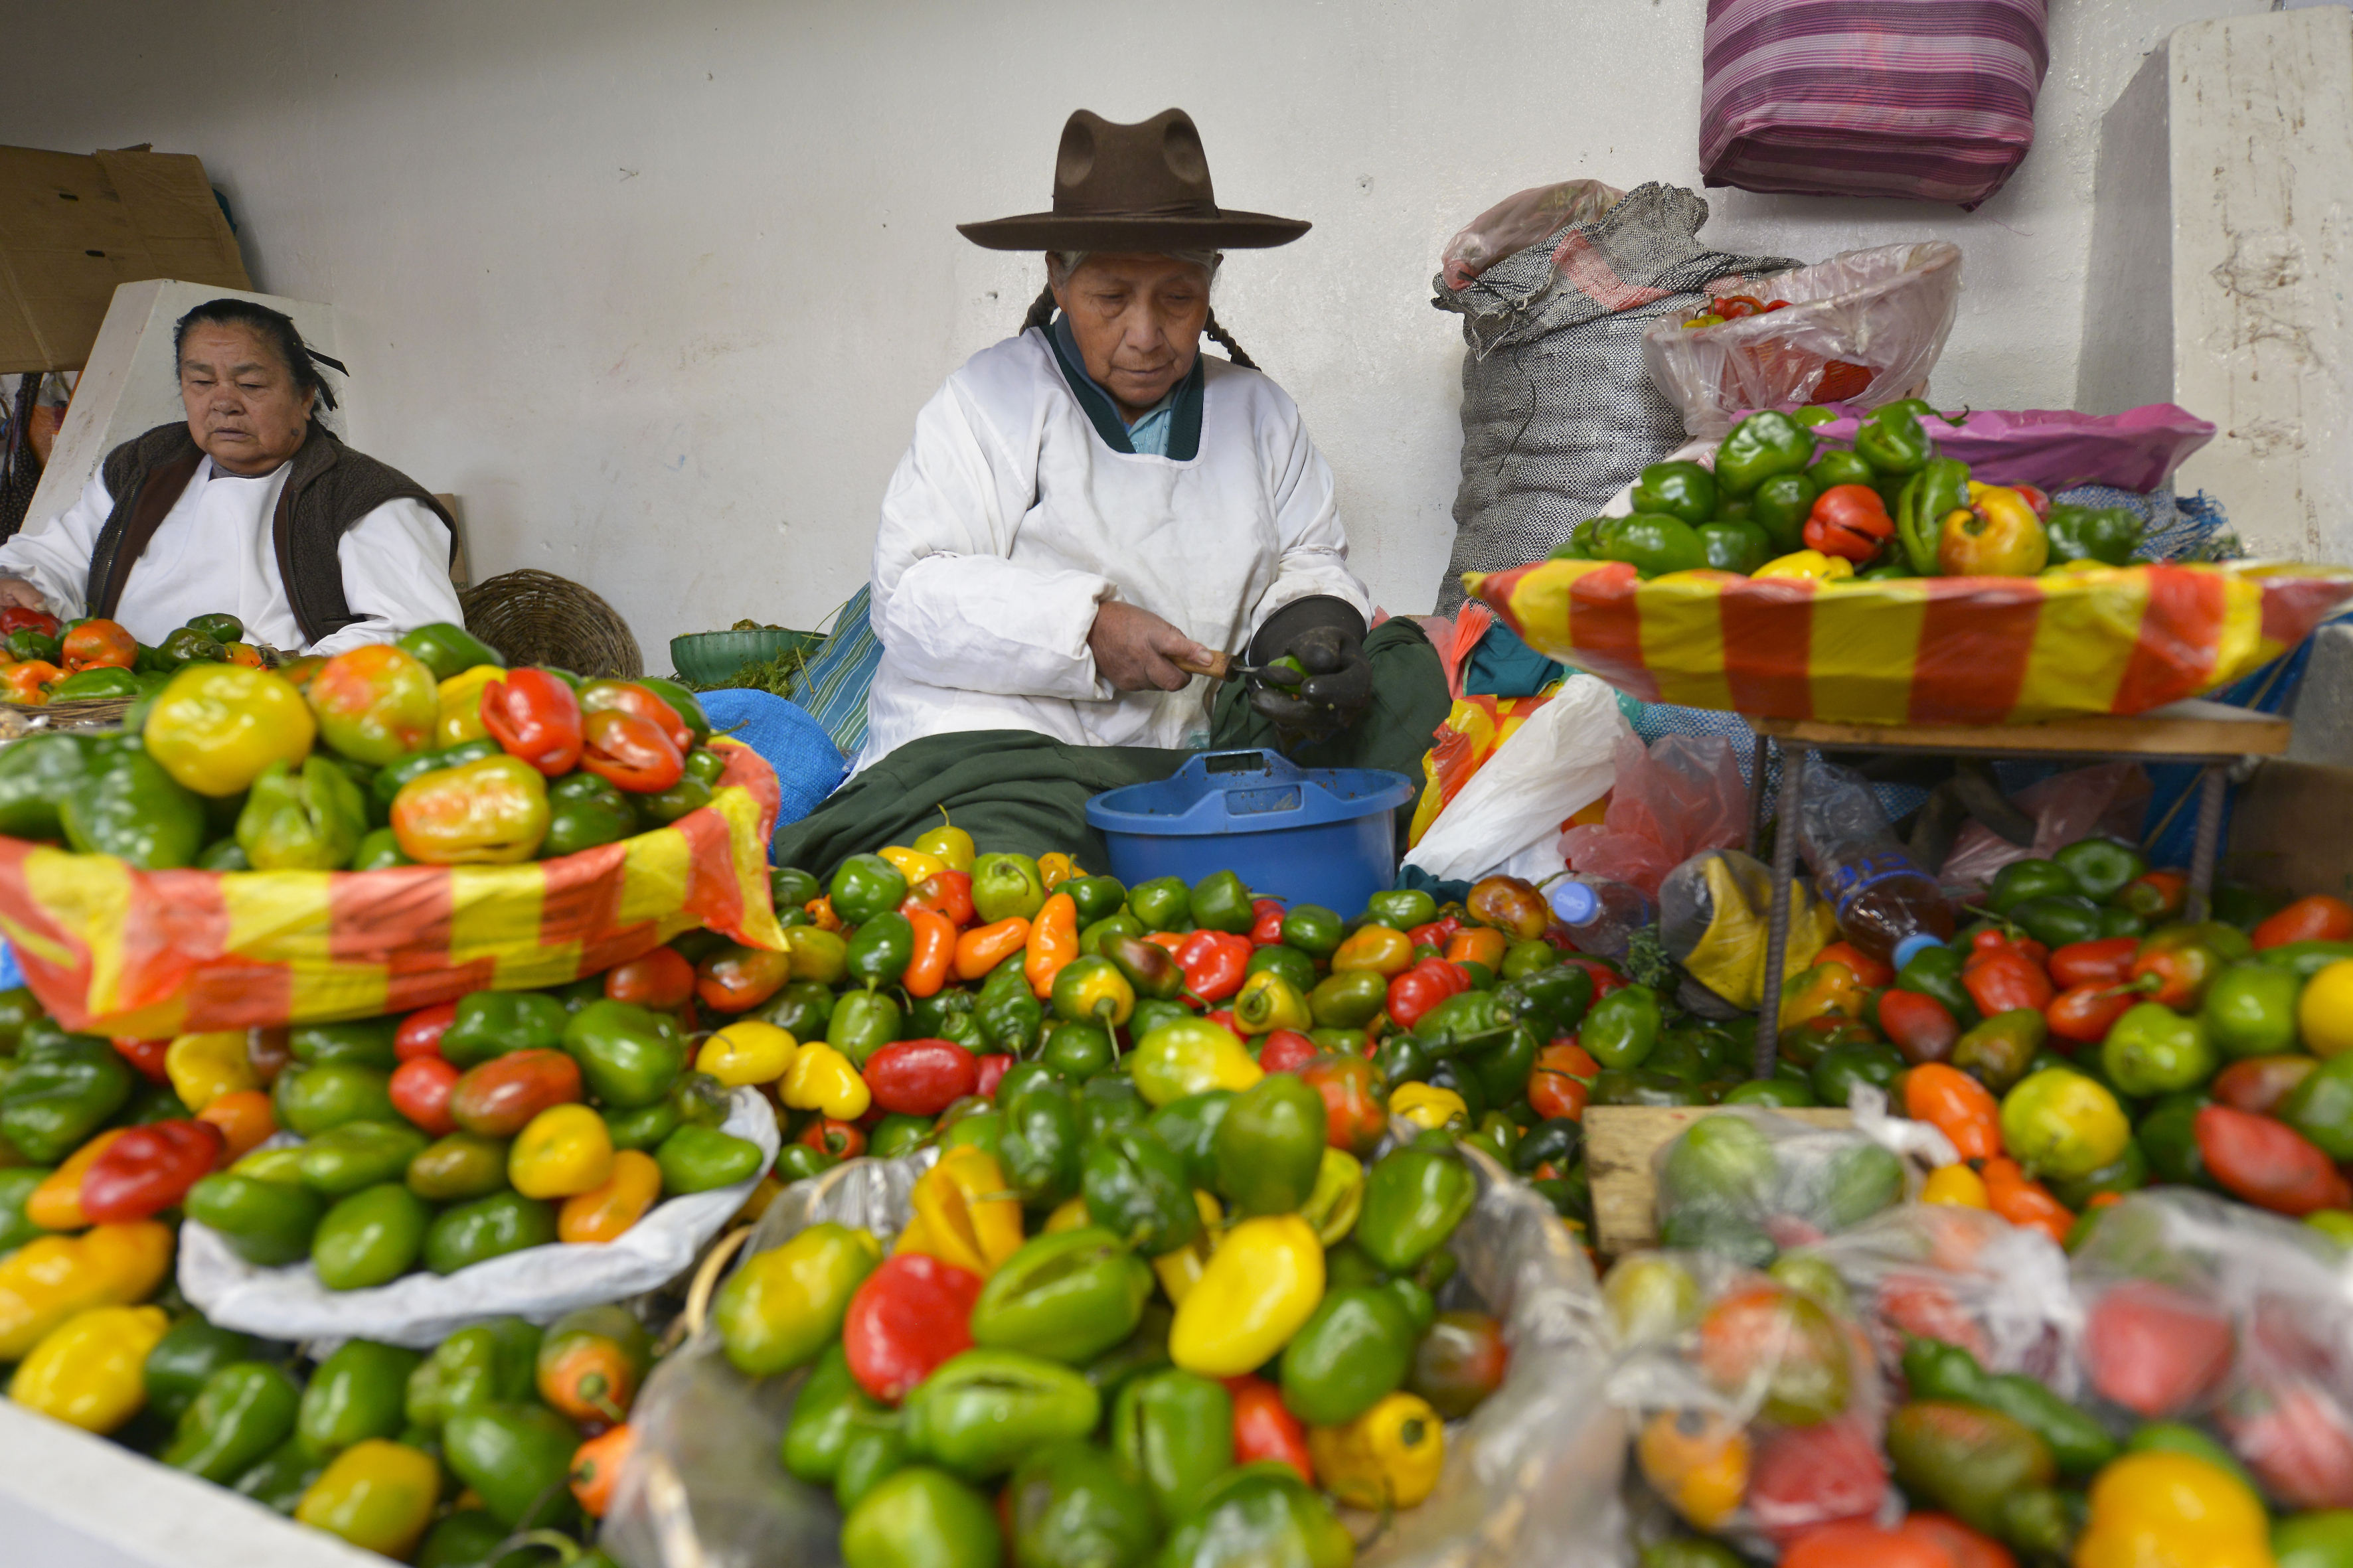 Imagen de agricultores latinoamericanos en un mercado